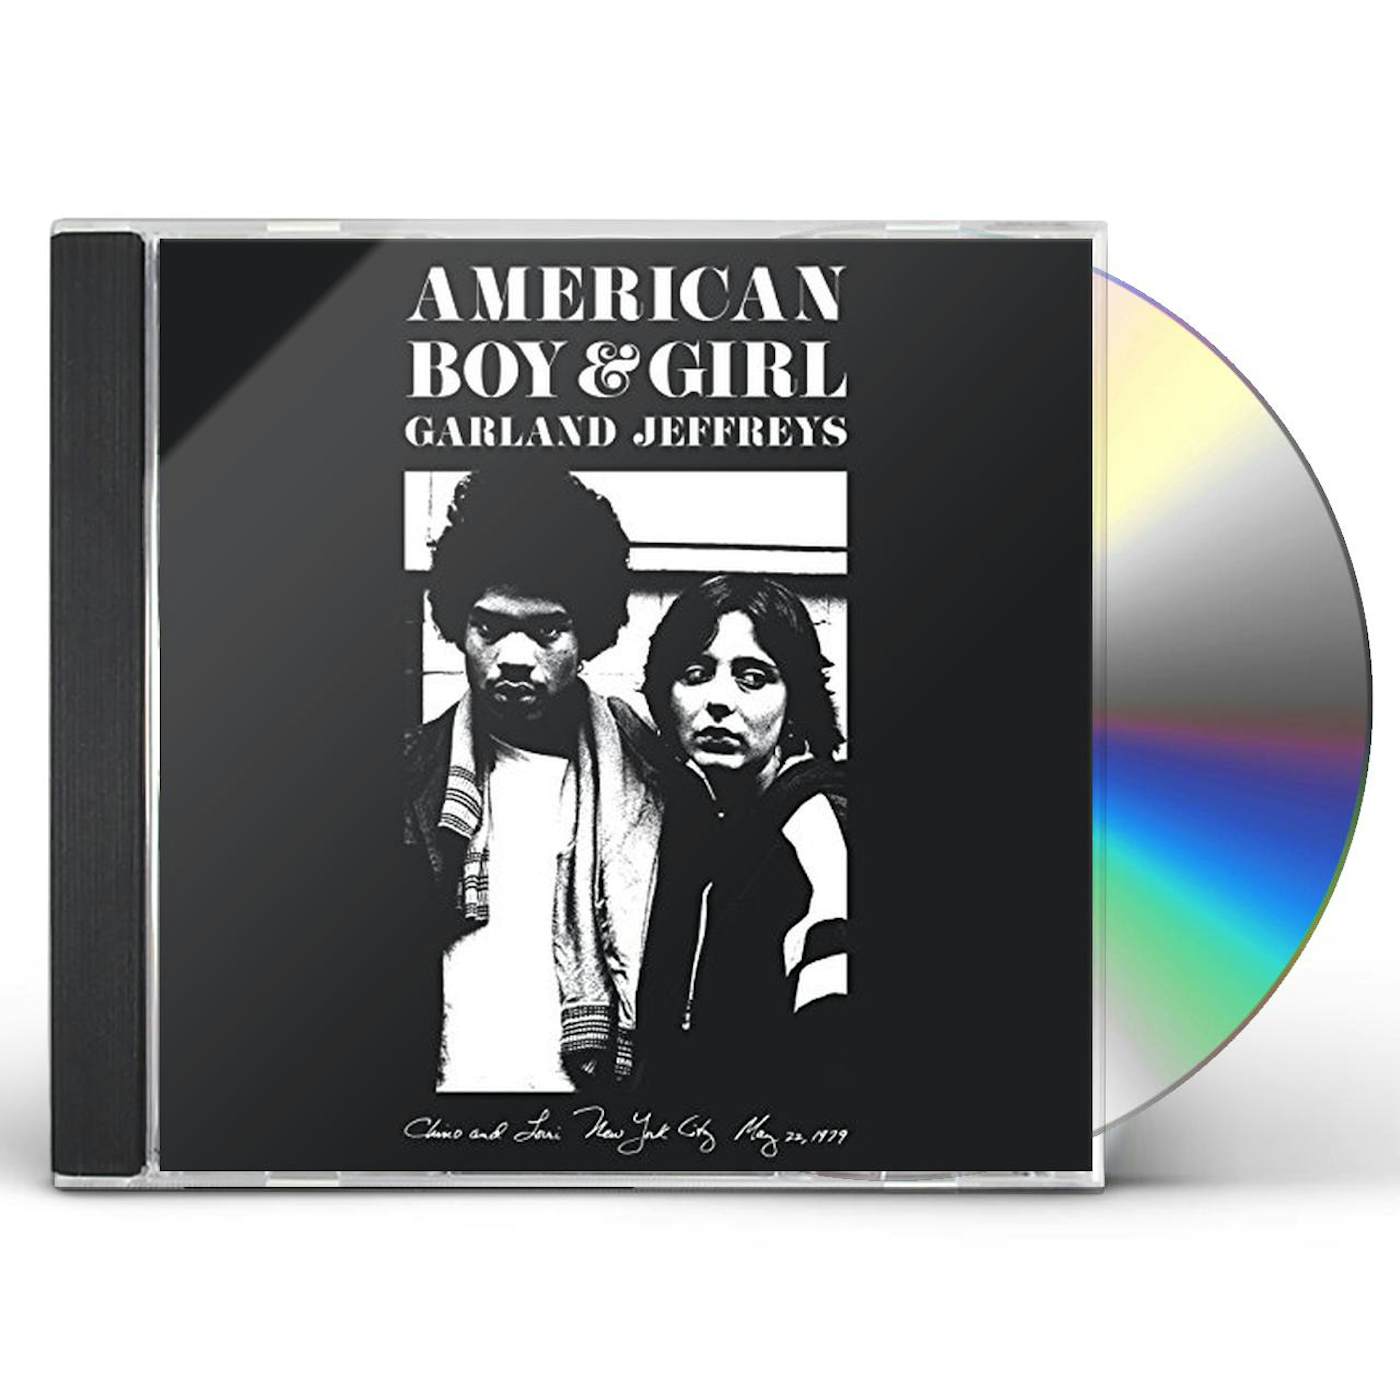 Garland Jeffreys AMERICAN BOY & GIRL CD